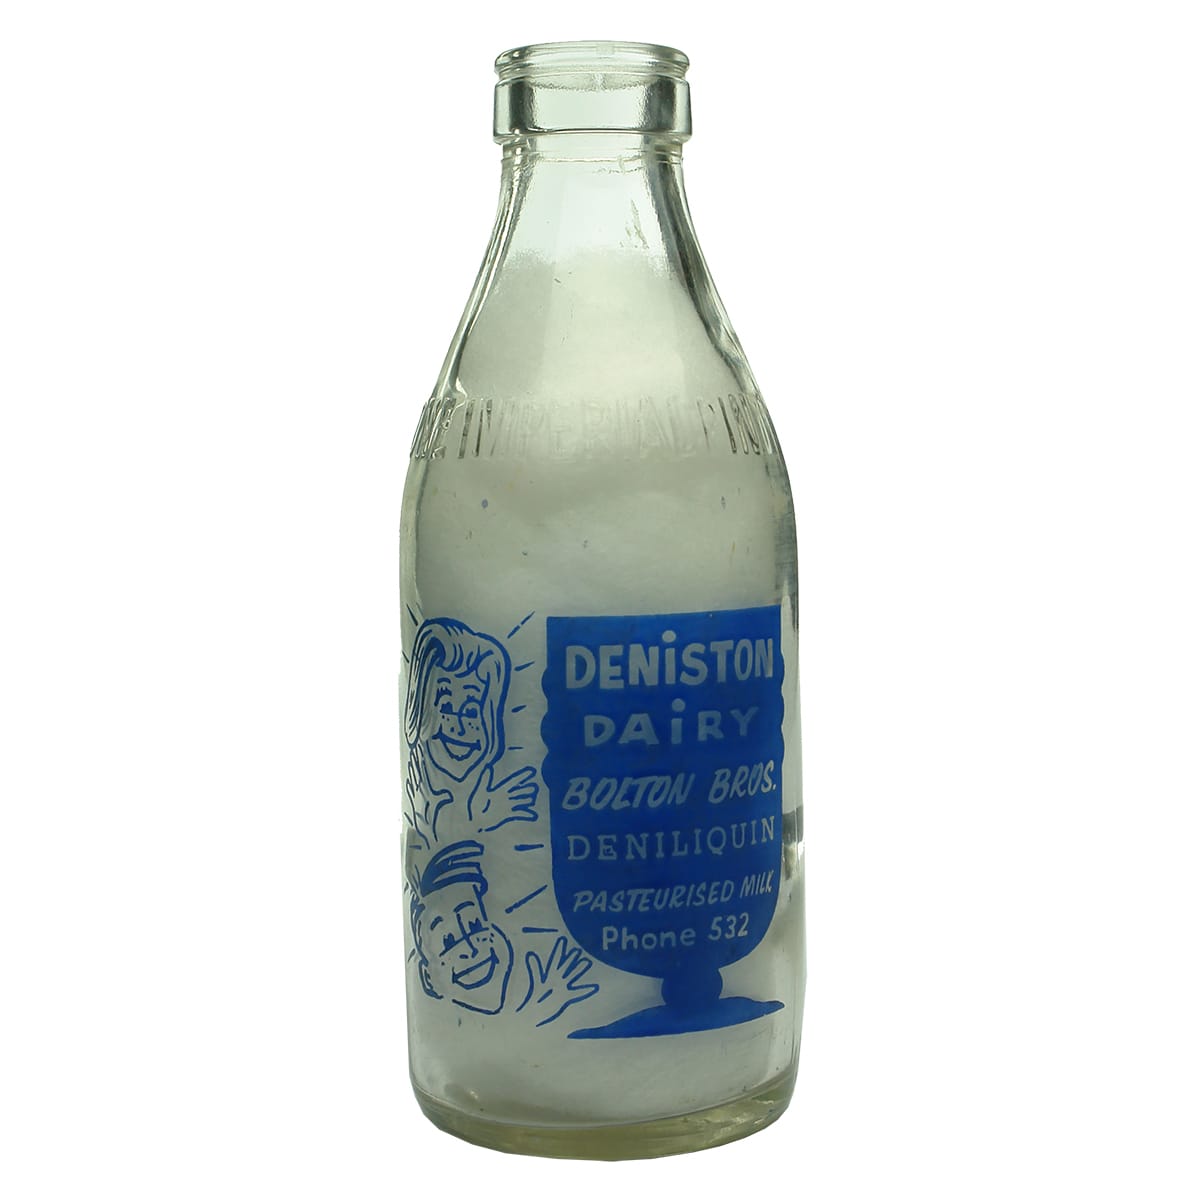 Milk. Deniston Dairy, Bolton Bros., Deniliquin. Foil top. Blue print. 1 Pint. (New South Wales)